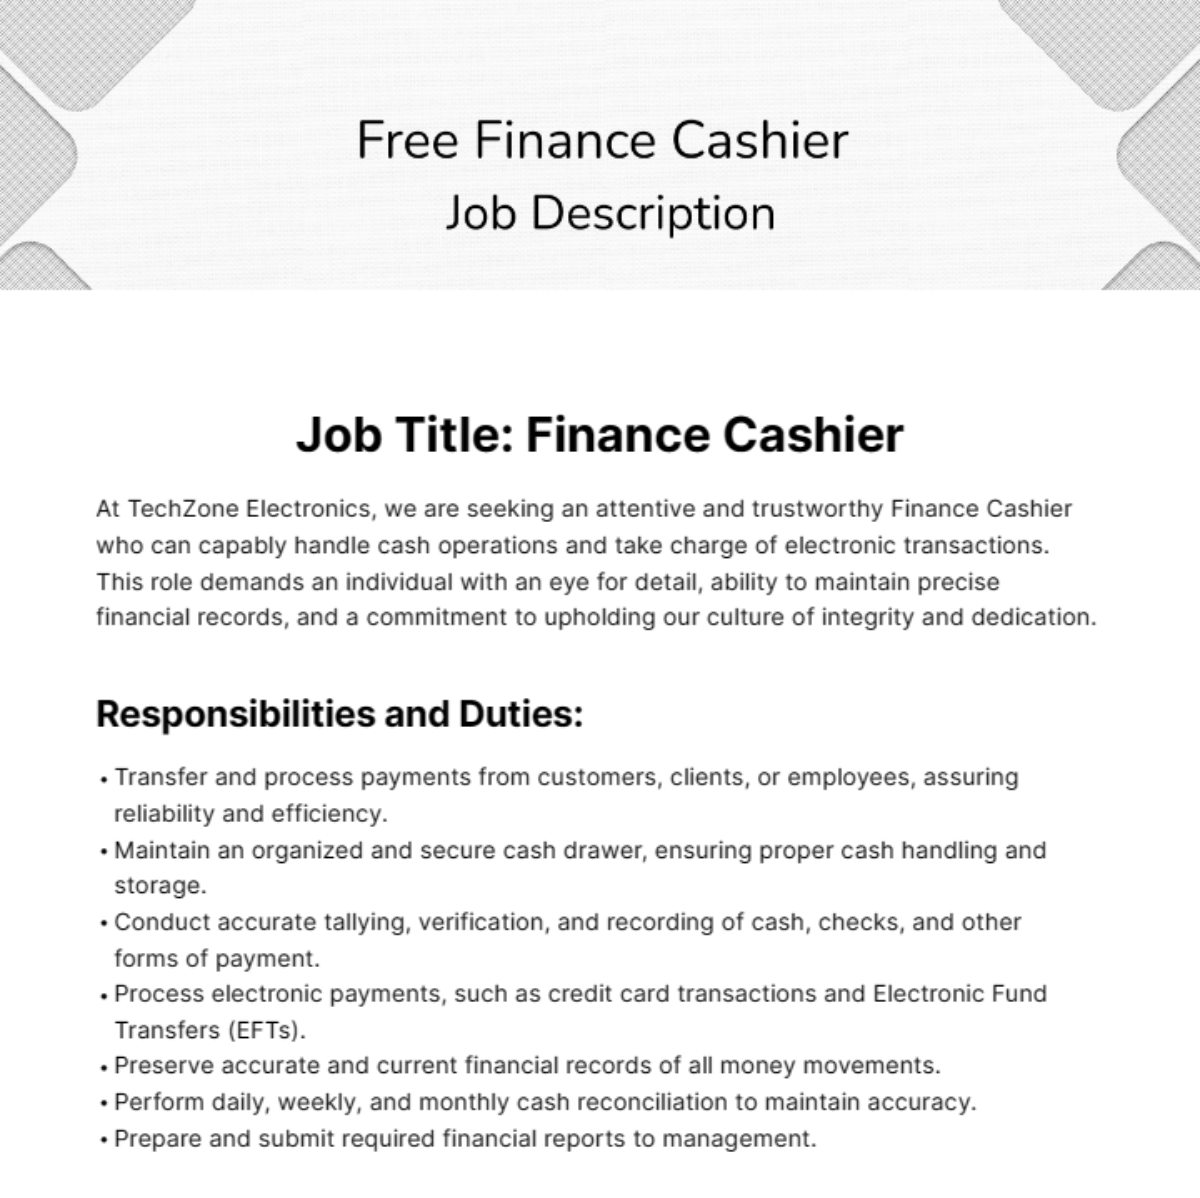 Finance Cashier Job Description Template